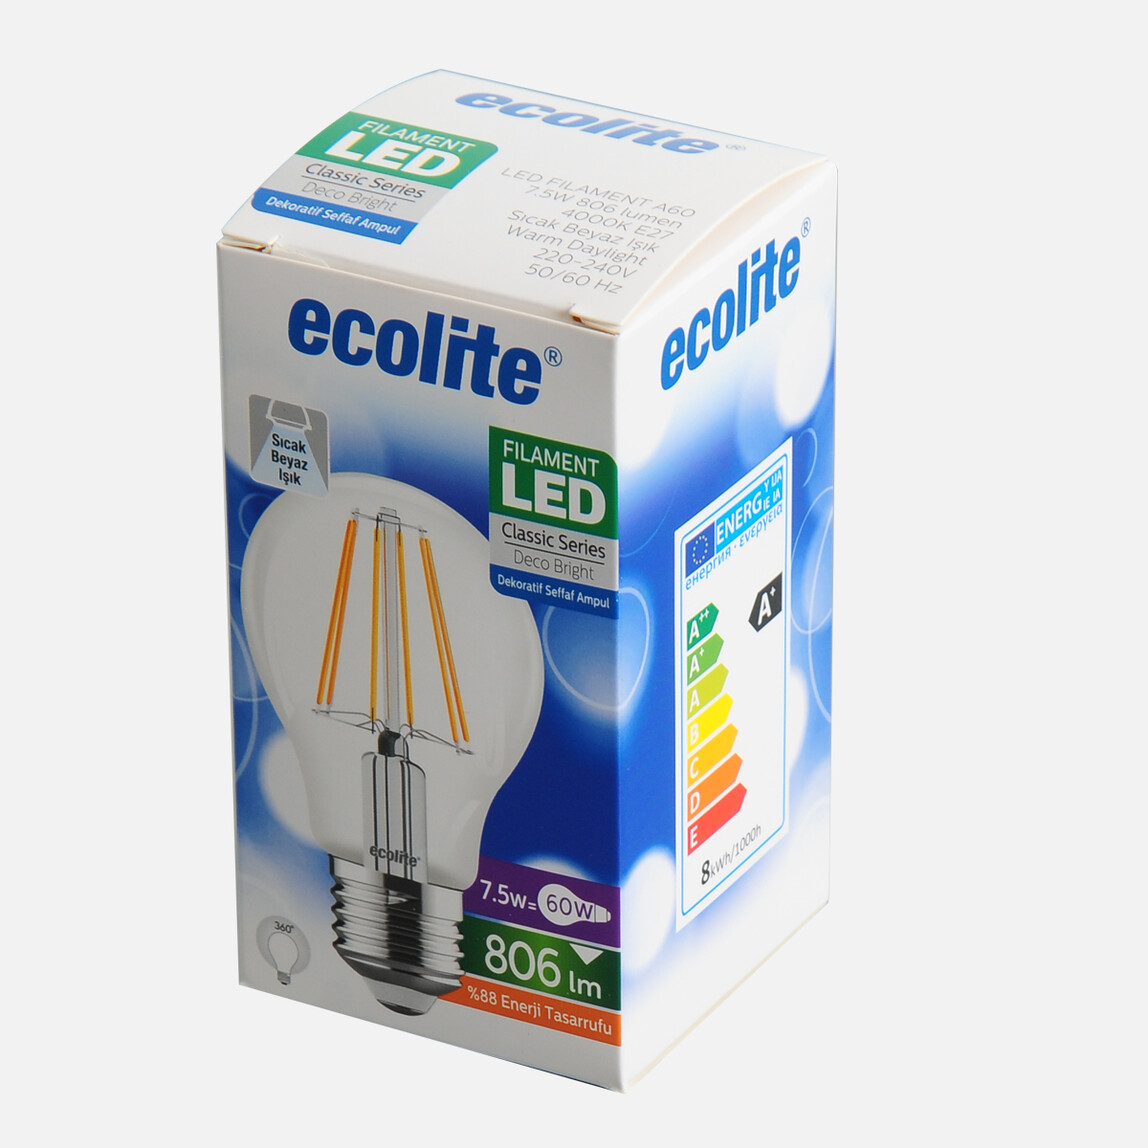    Ecolite Filament A60 7.5 W Beyaz Klasik E27 Duy Led Ampul  